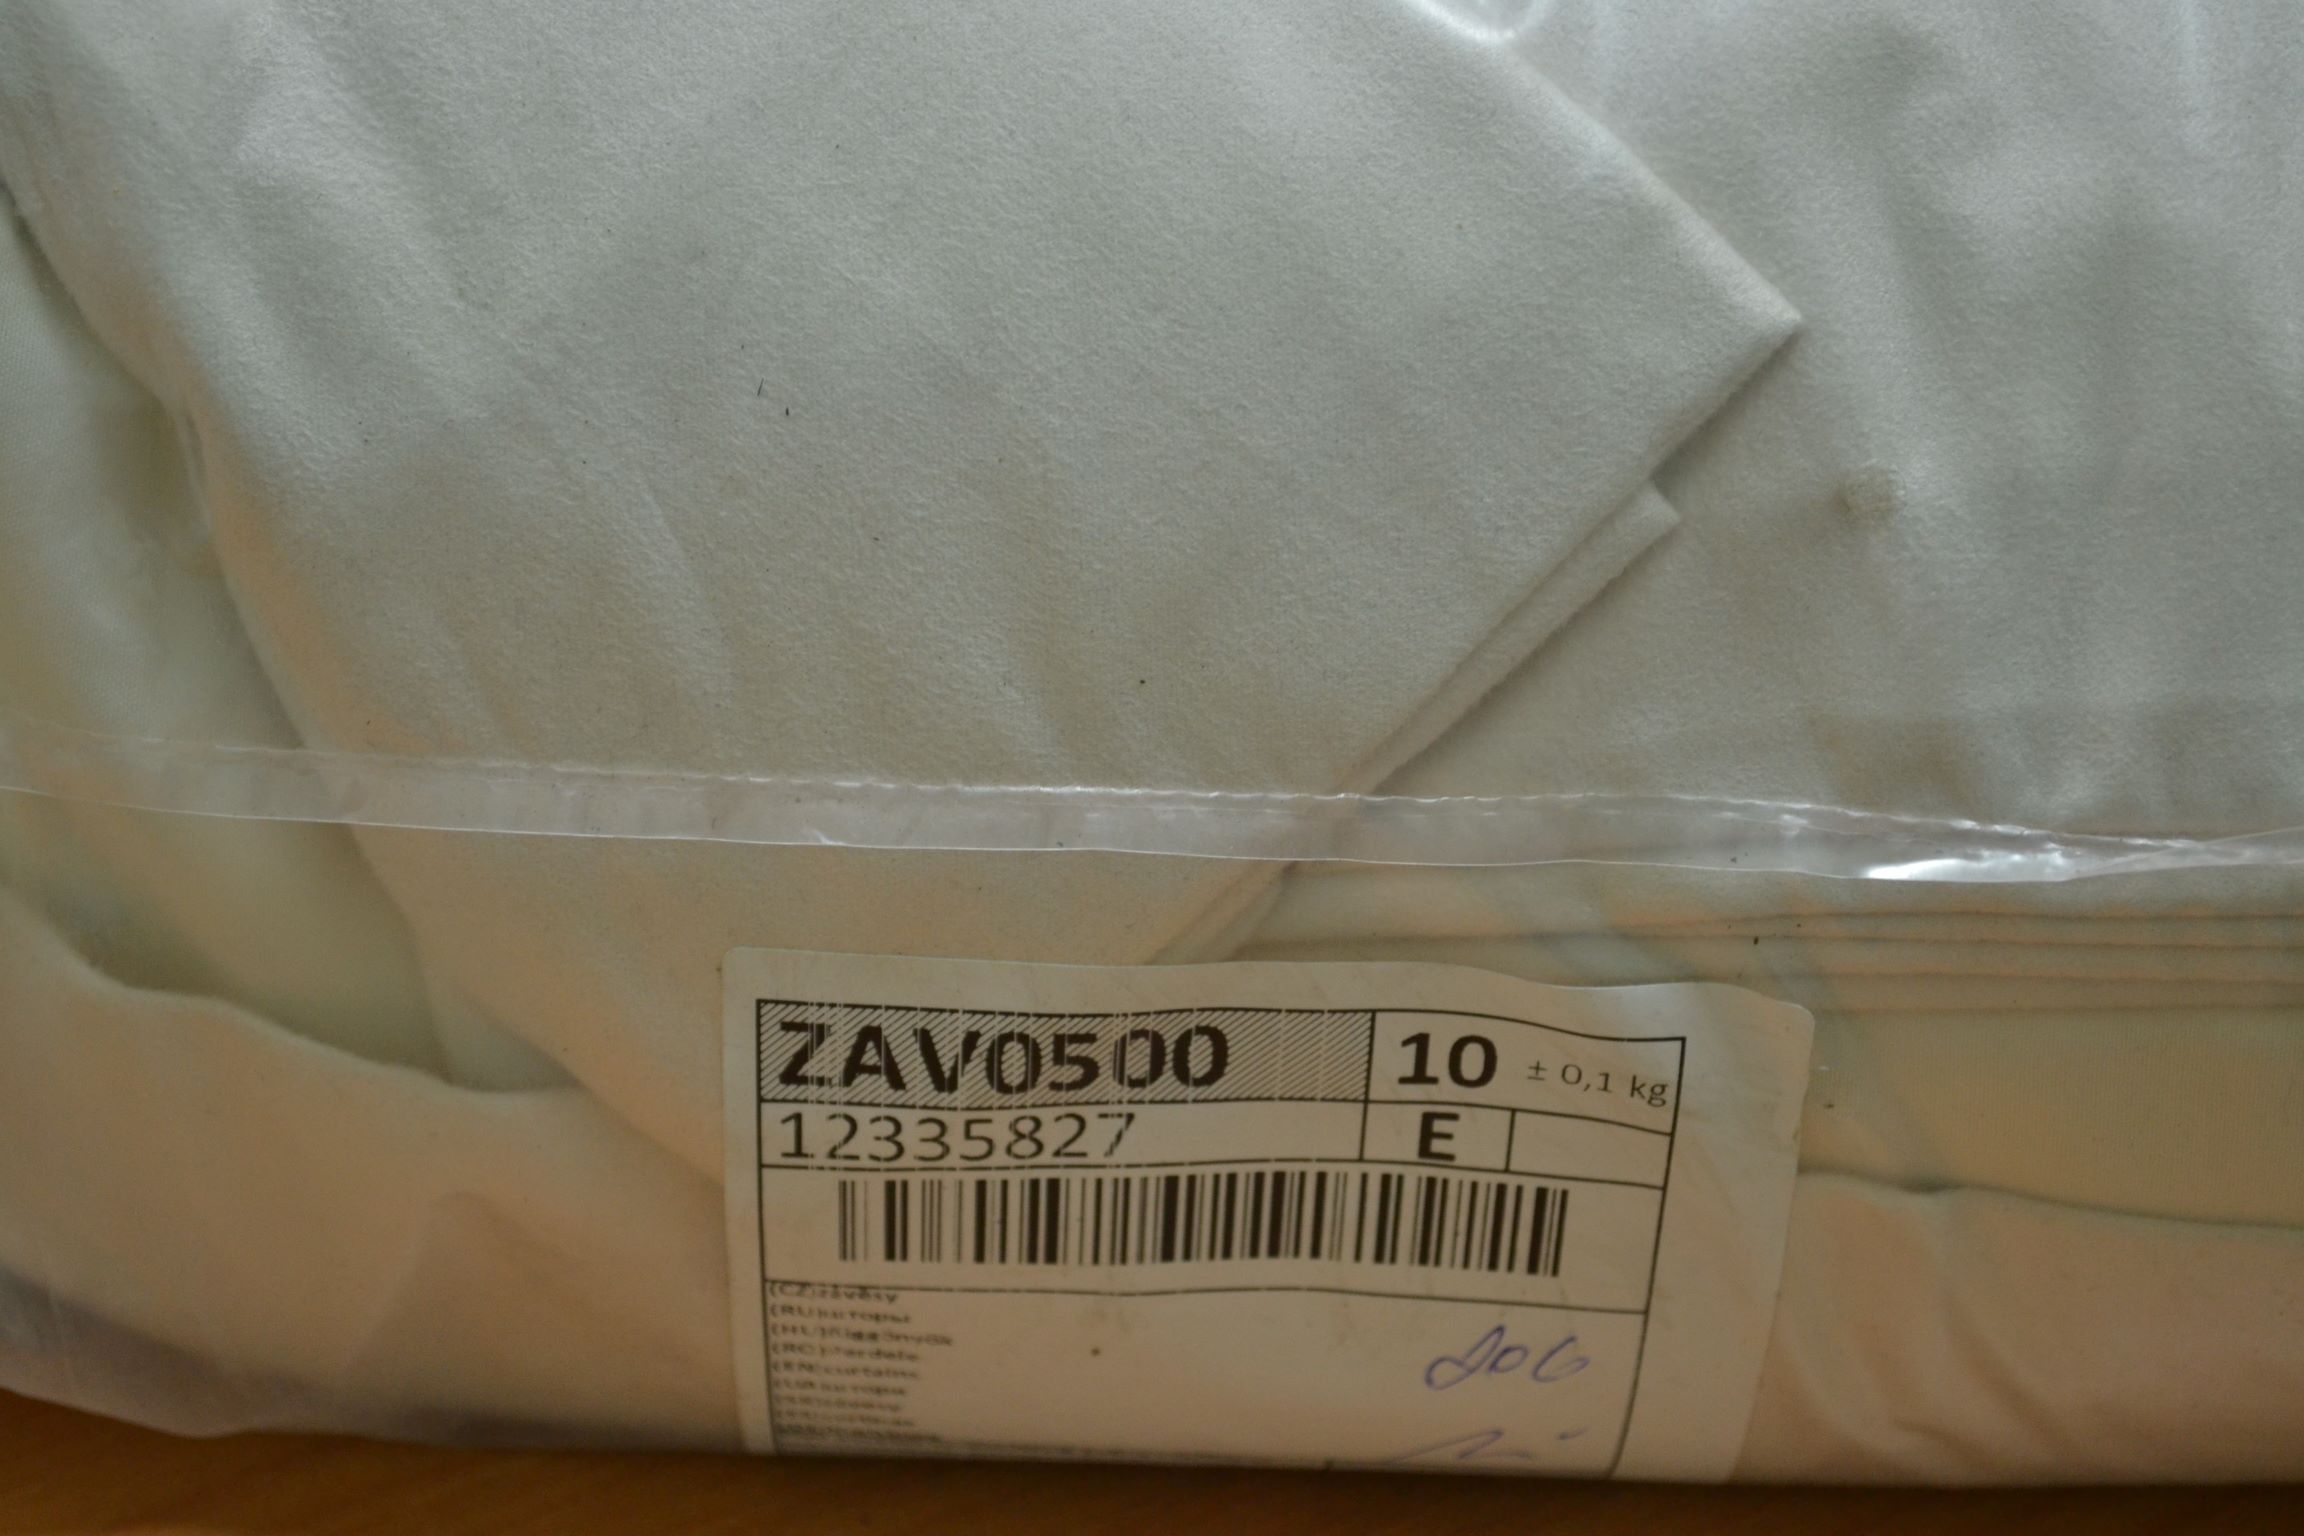 ZAV0500 Шторы; Код мешка 12335827